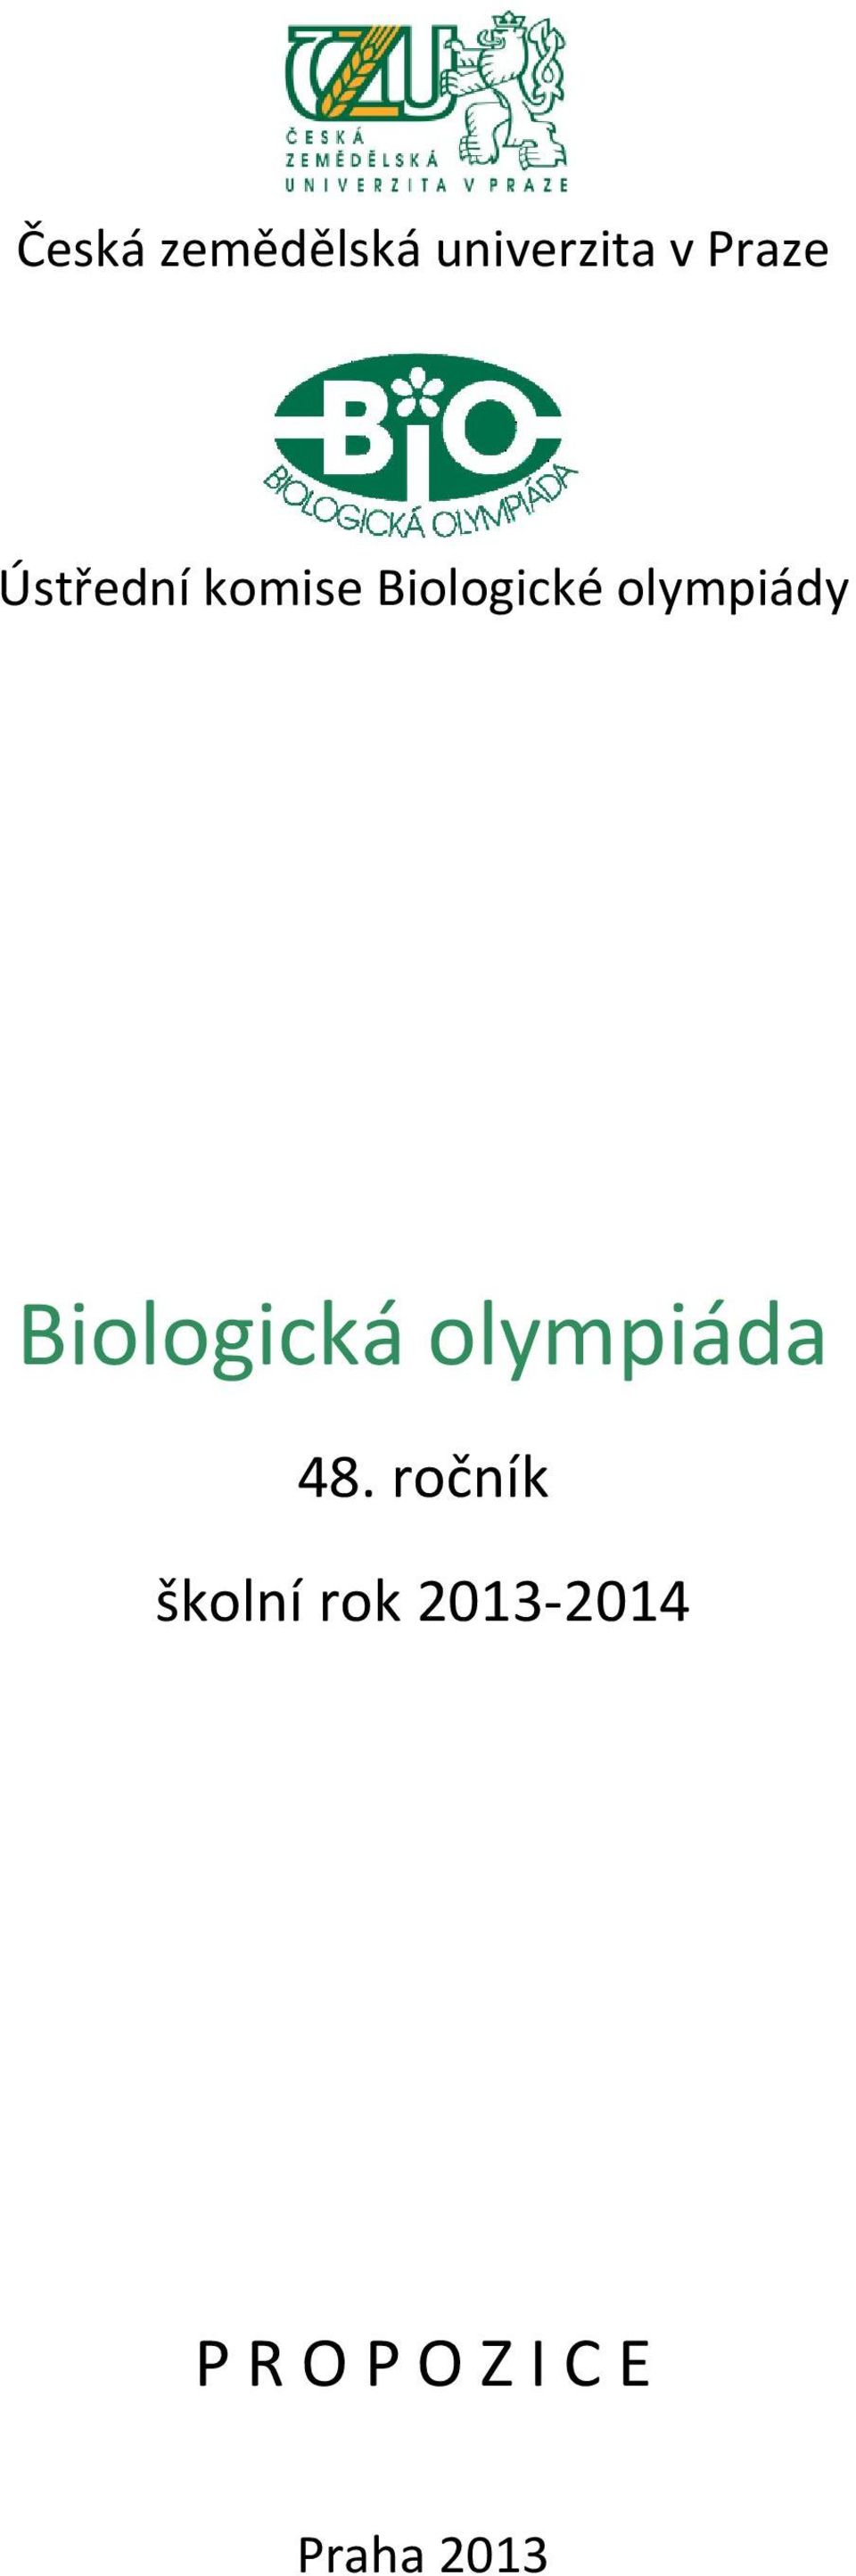 Biologická olympiáda 48.